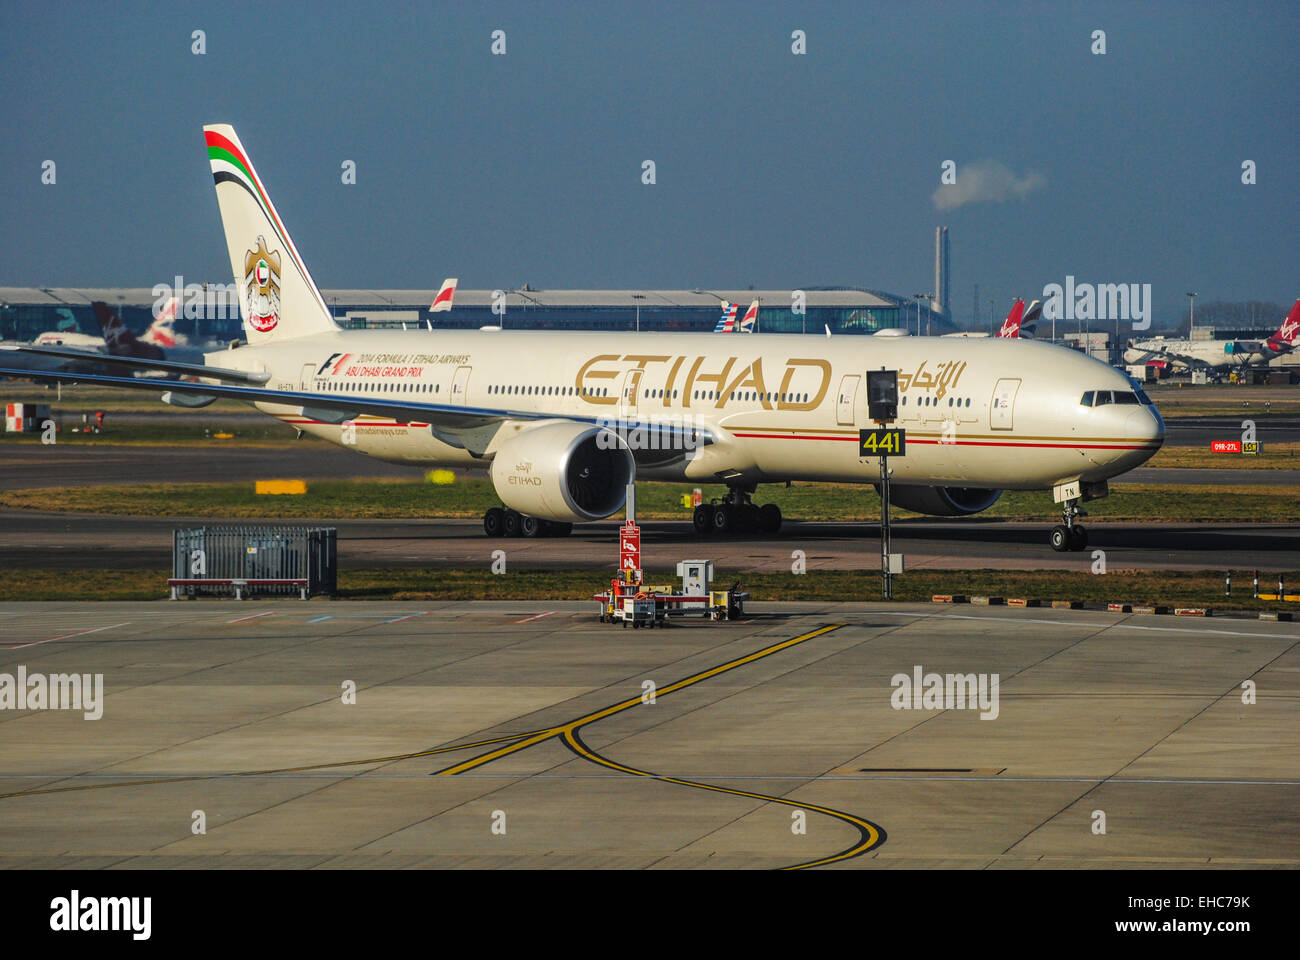 Etihad Airline jet airplane airlines Stock Photo